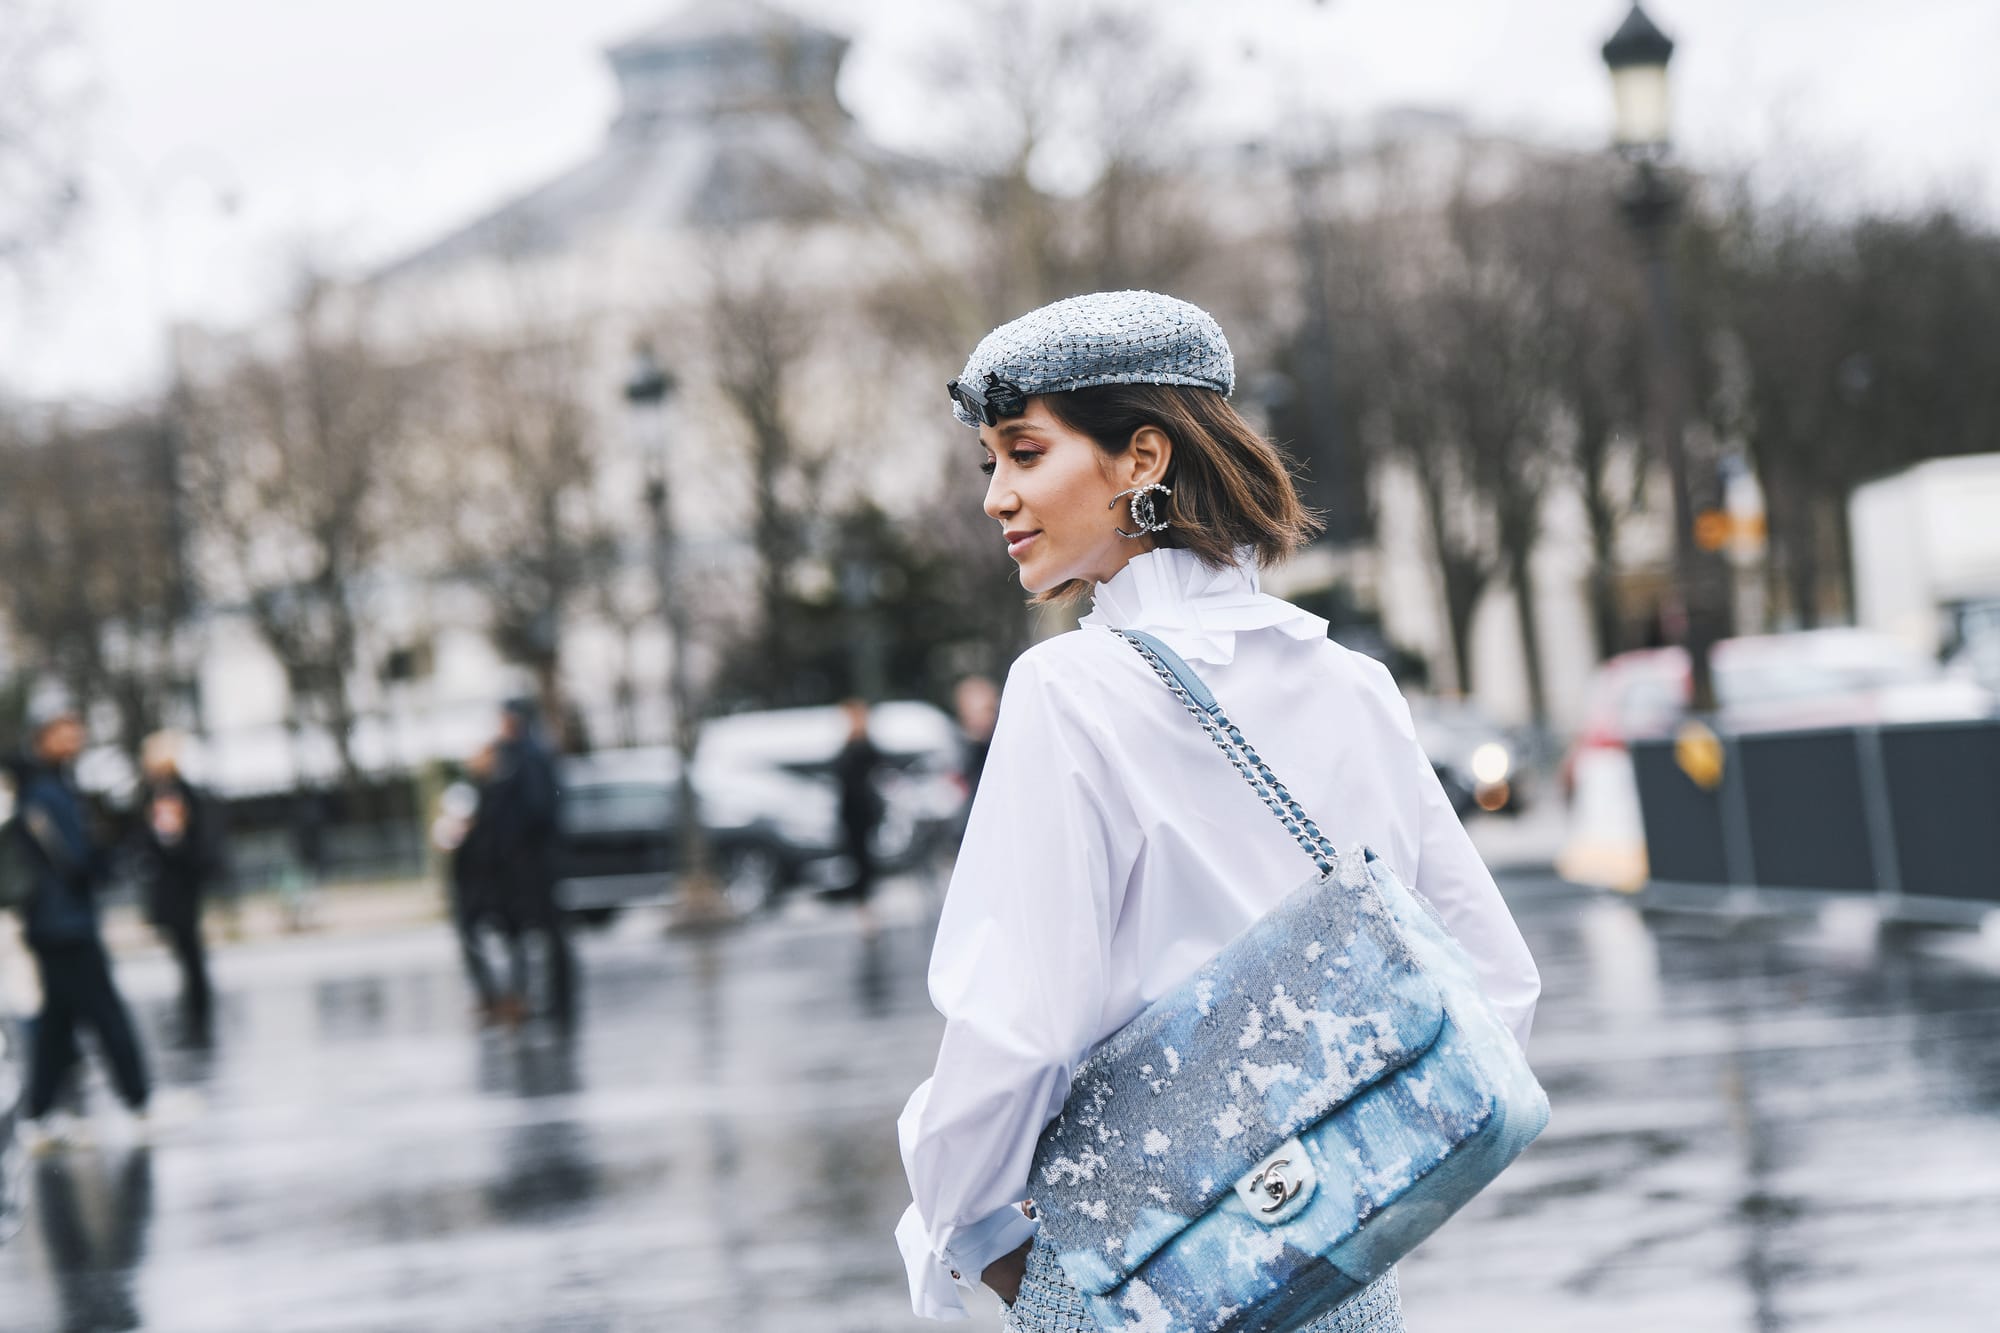 Street Style, Fall Winter 2019, Paris Fashion Week, France - 05 Mar 2019